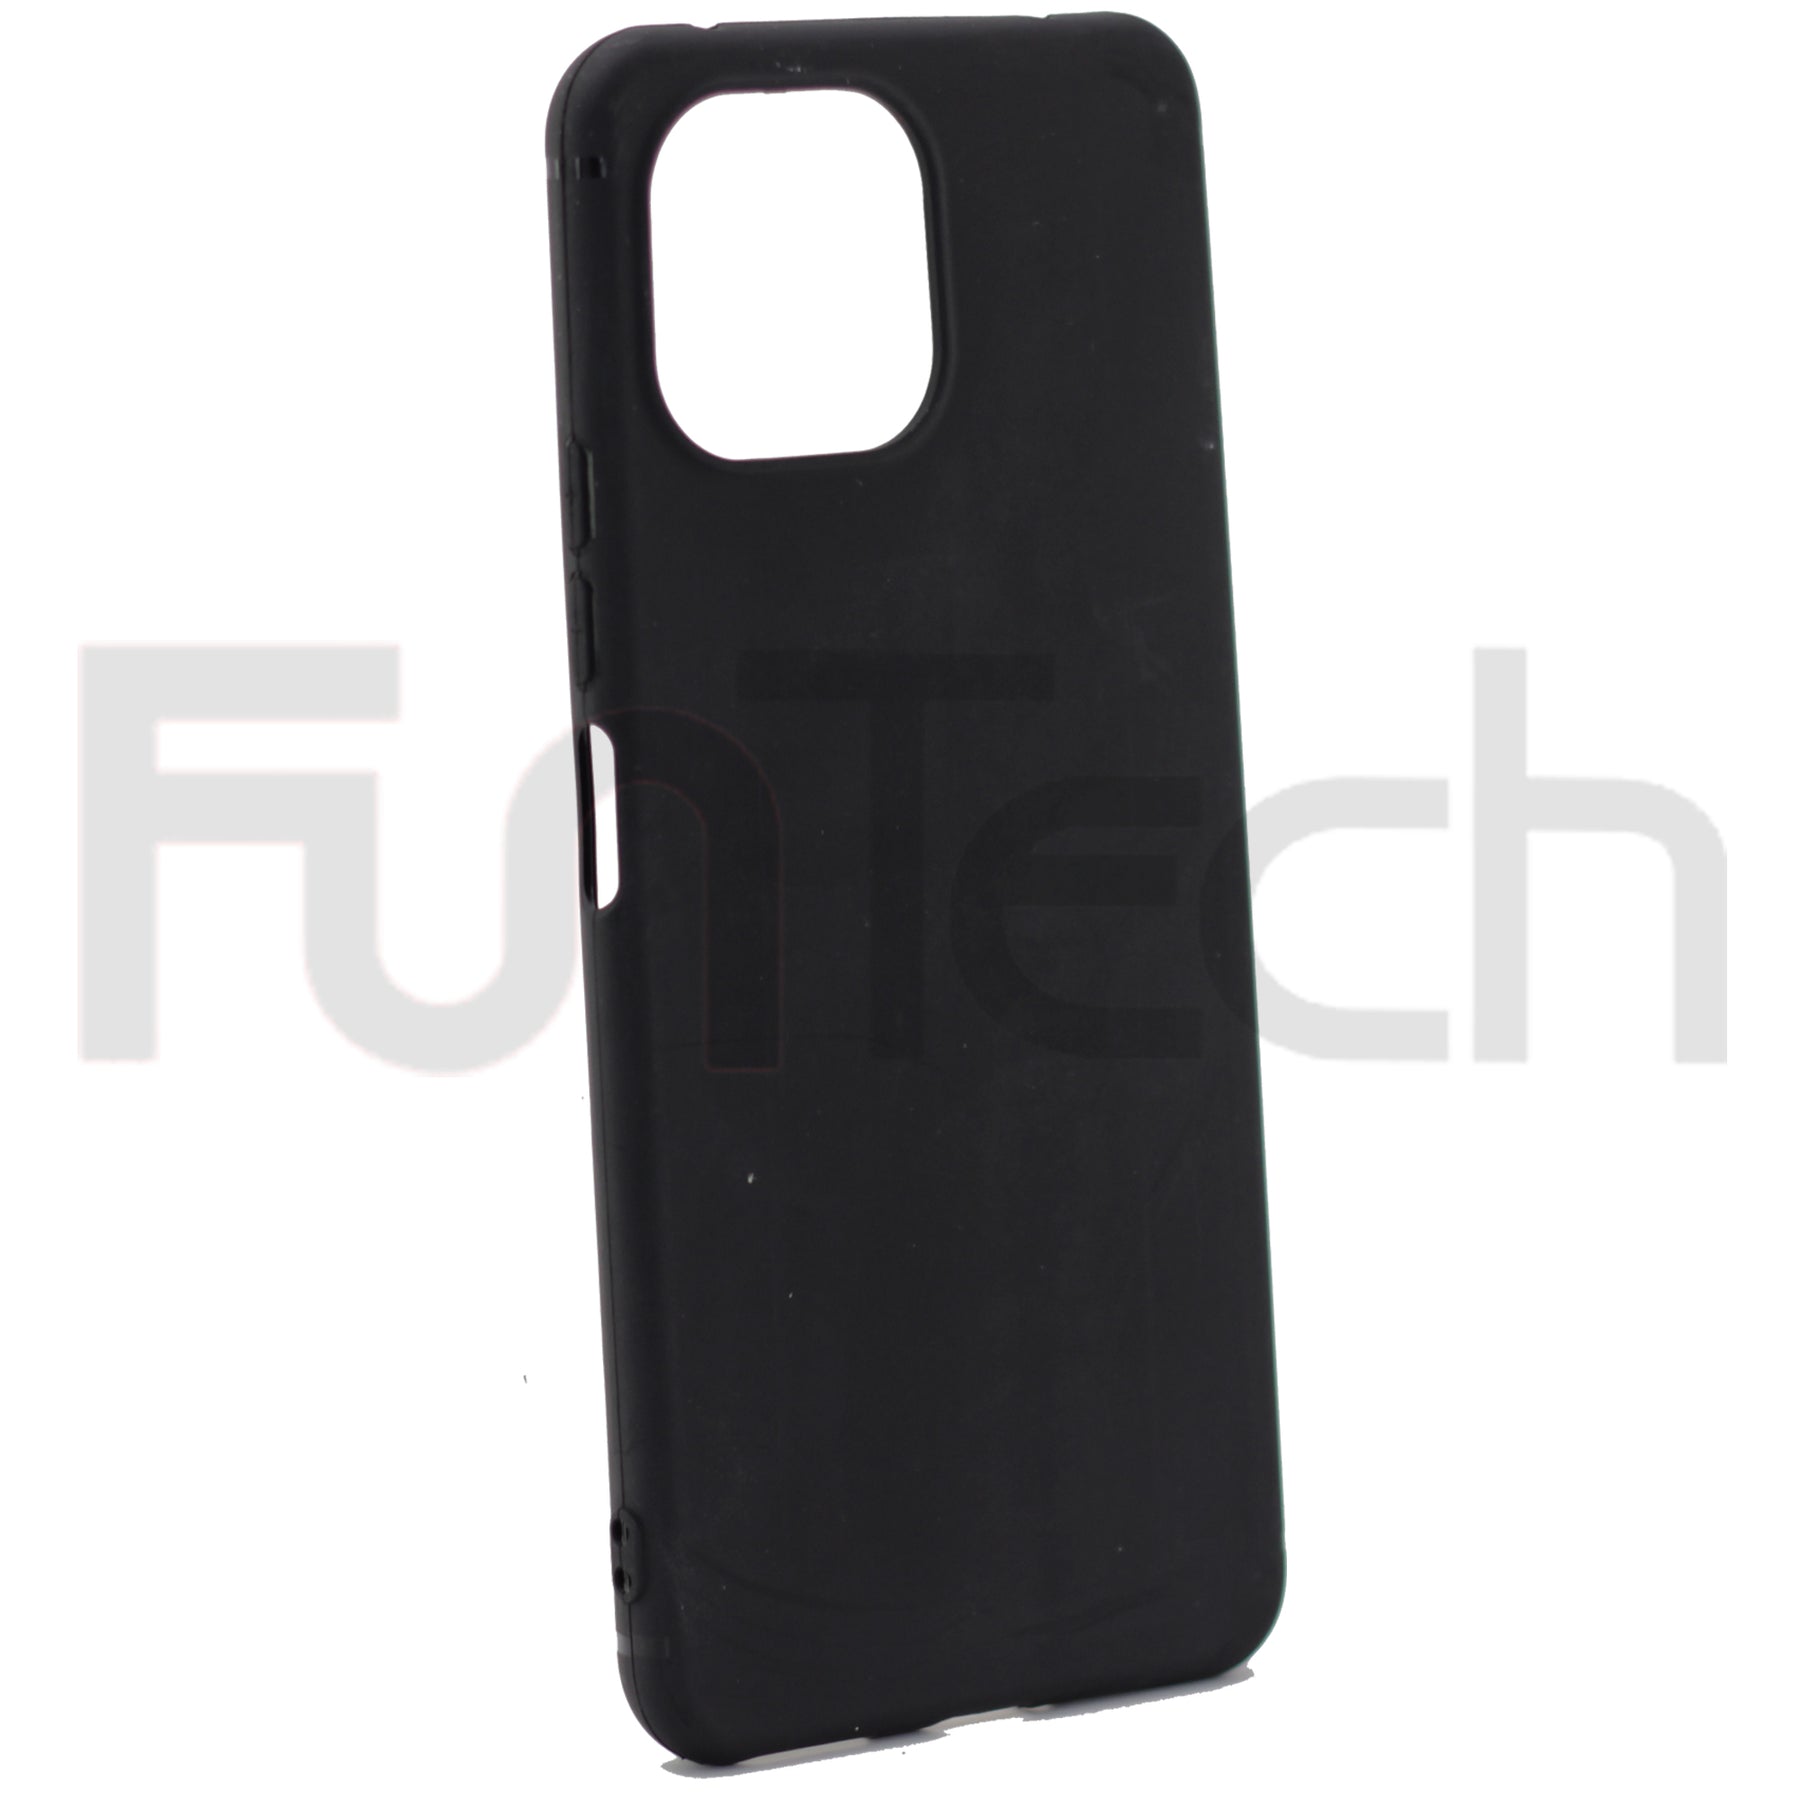 Xiaomi Mi 11 Lite, Protective Case, Color Black